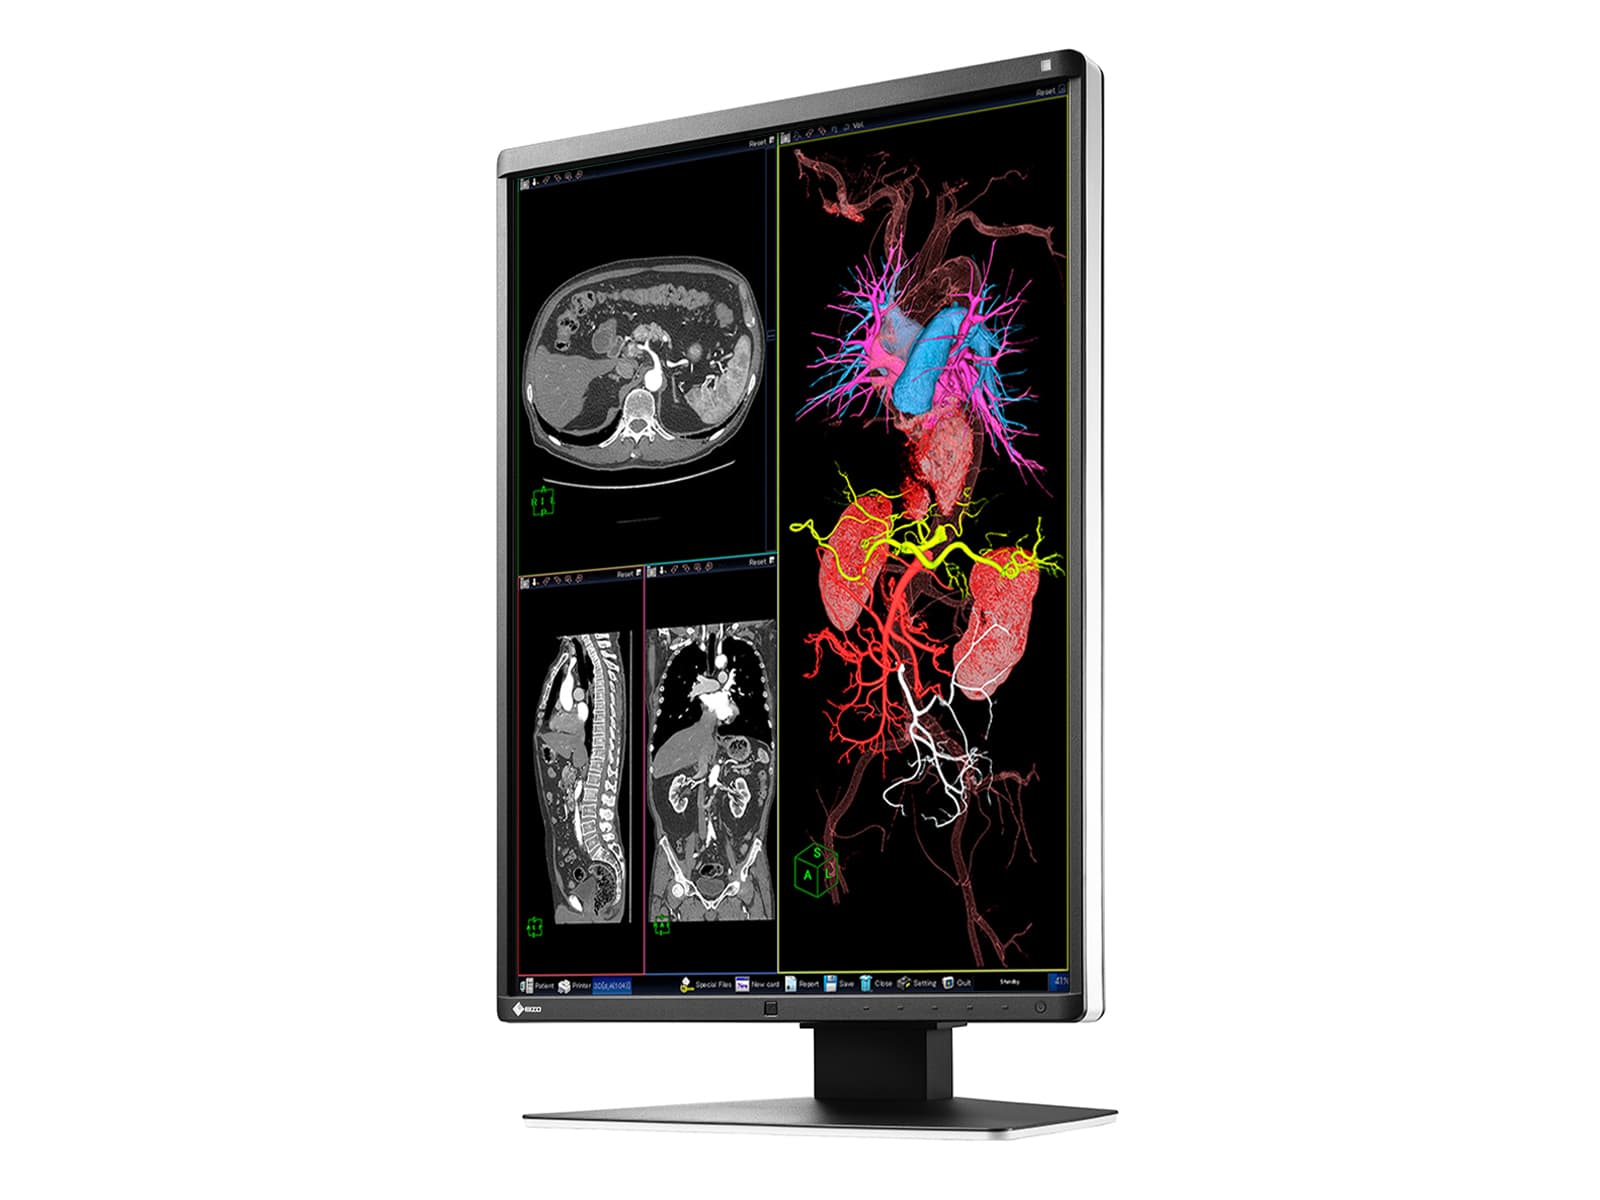 Eizo RadiForce RX350 Pantalla de diagnóstico de radiología general LED en color de 3 MP y 21" (RX350) Monitors.com